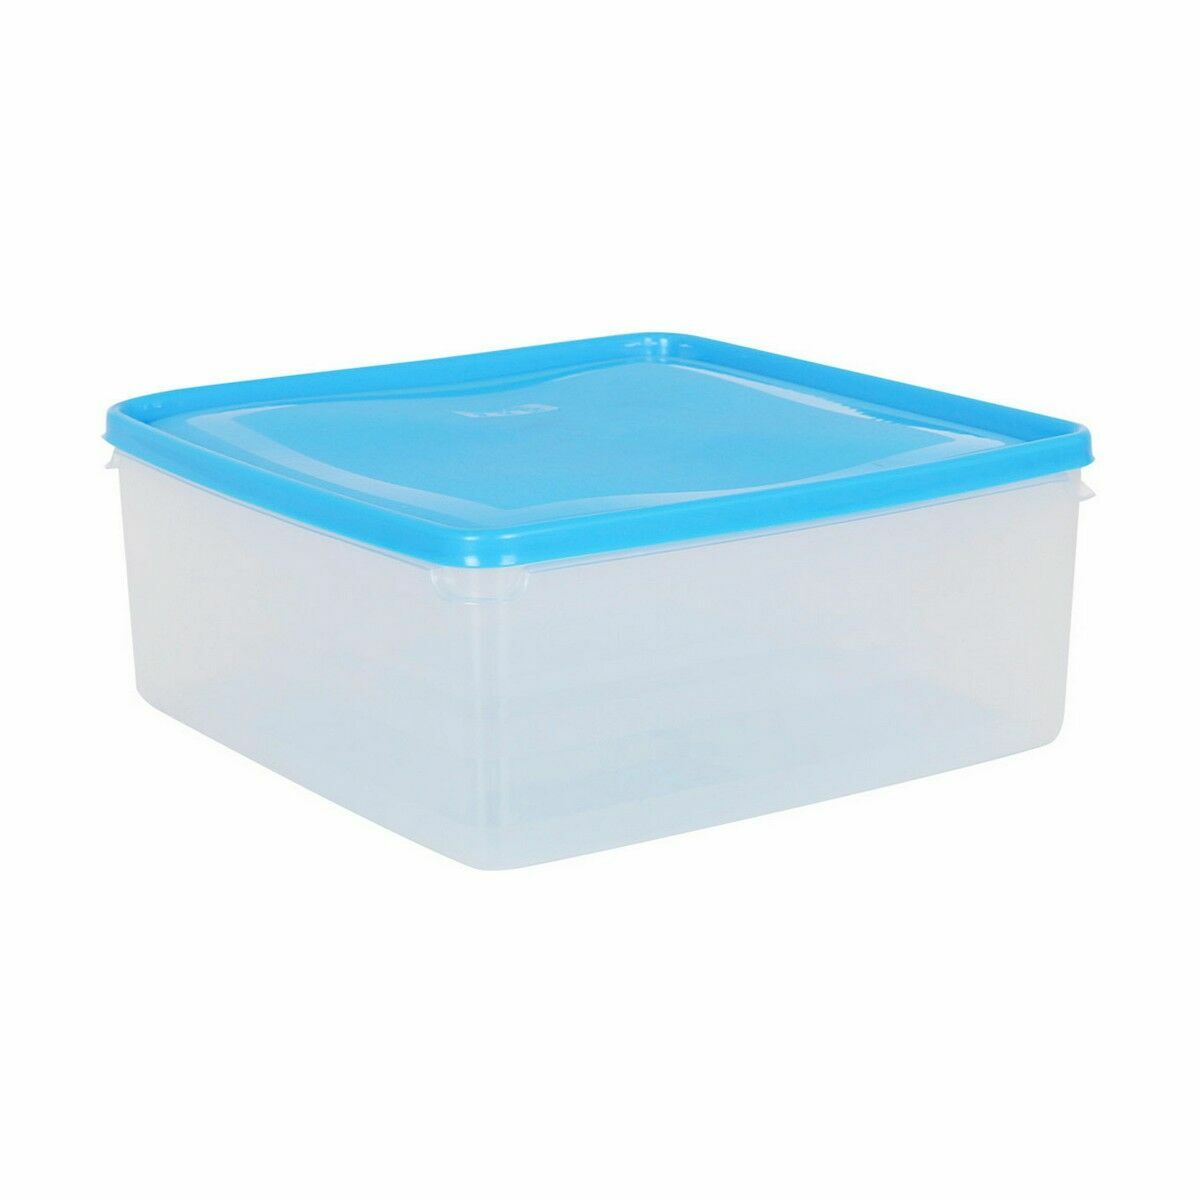 Lunch box Squared 24 x 24 x 10 cm (6 Units)